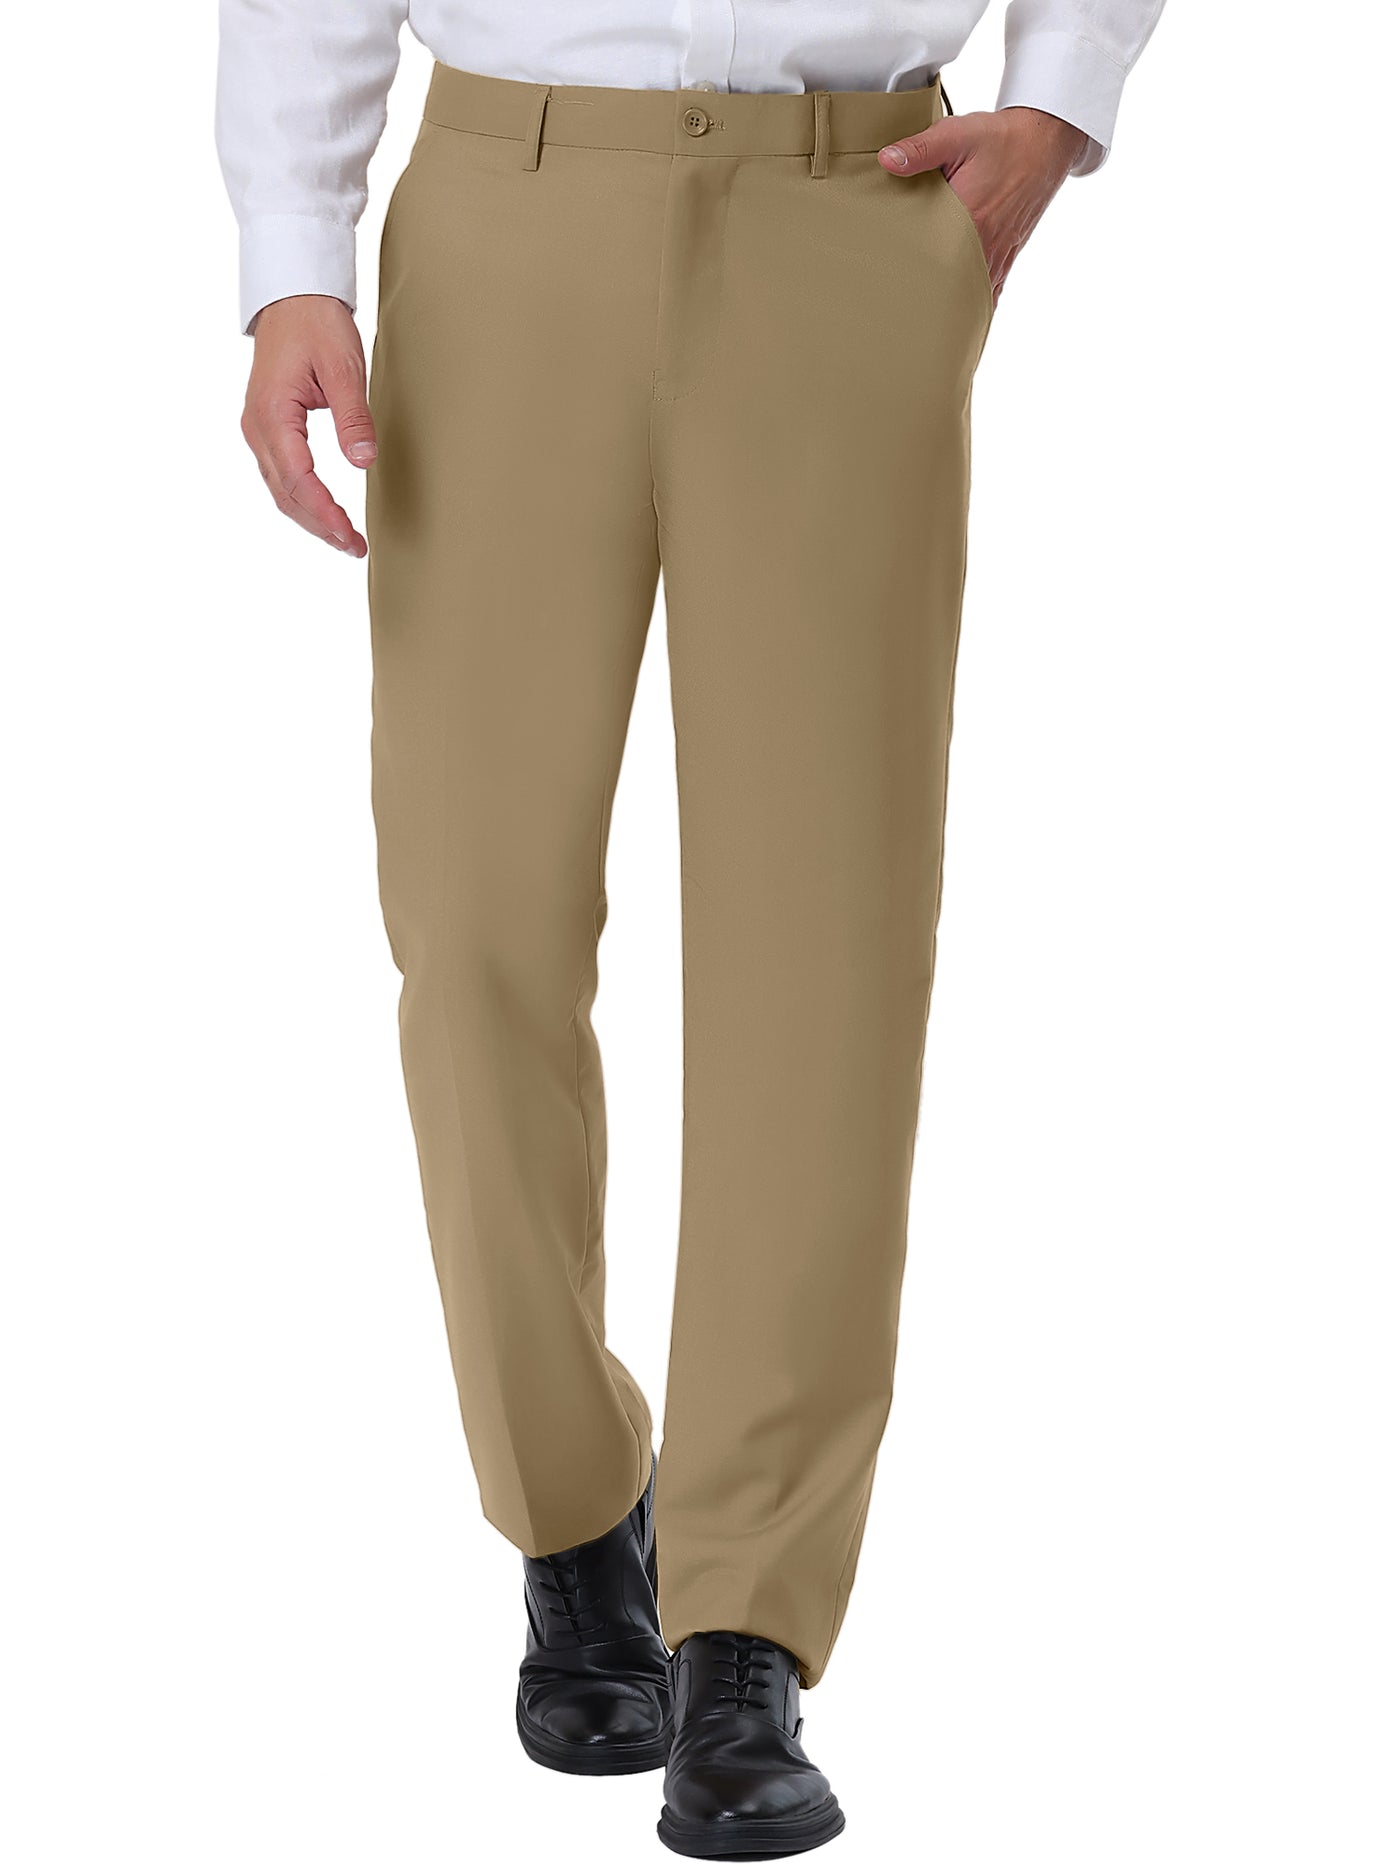 Bublédon Men's Flat Front Dress Pants Comfort Formal Straight Fit Trousers